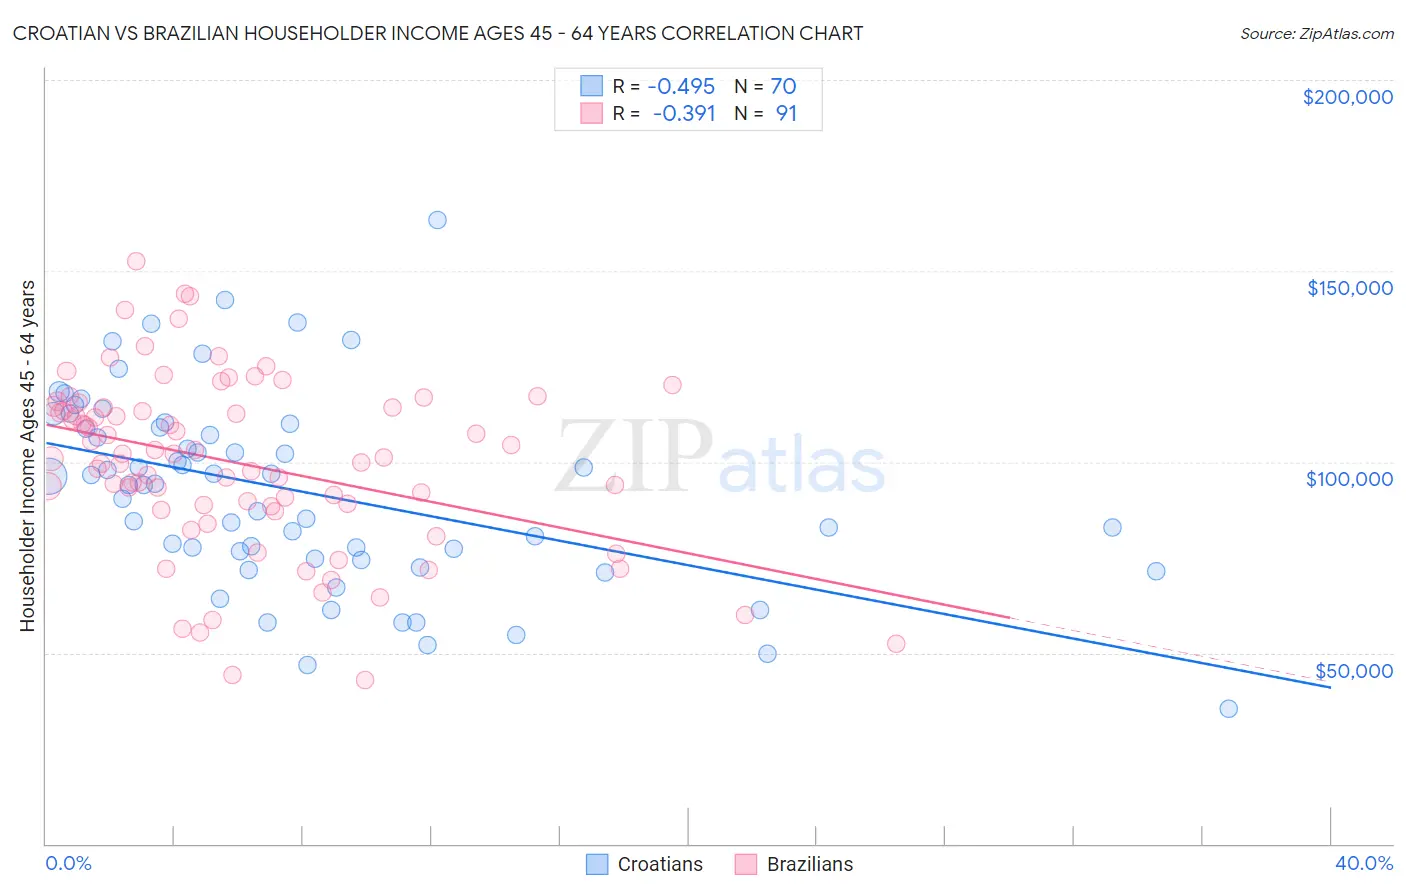 Croatian vs Brazilian Householder Income Ages 45 - 64 years